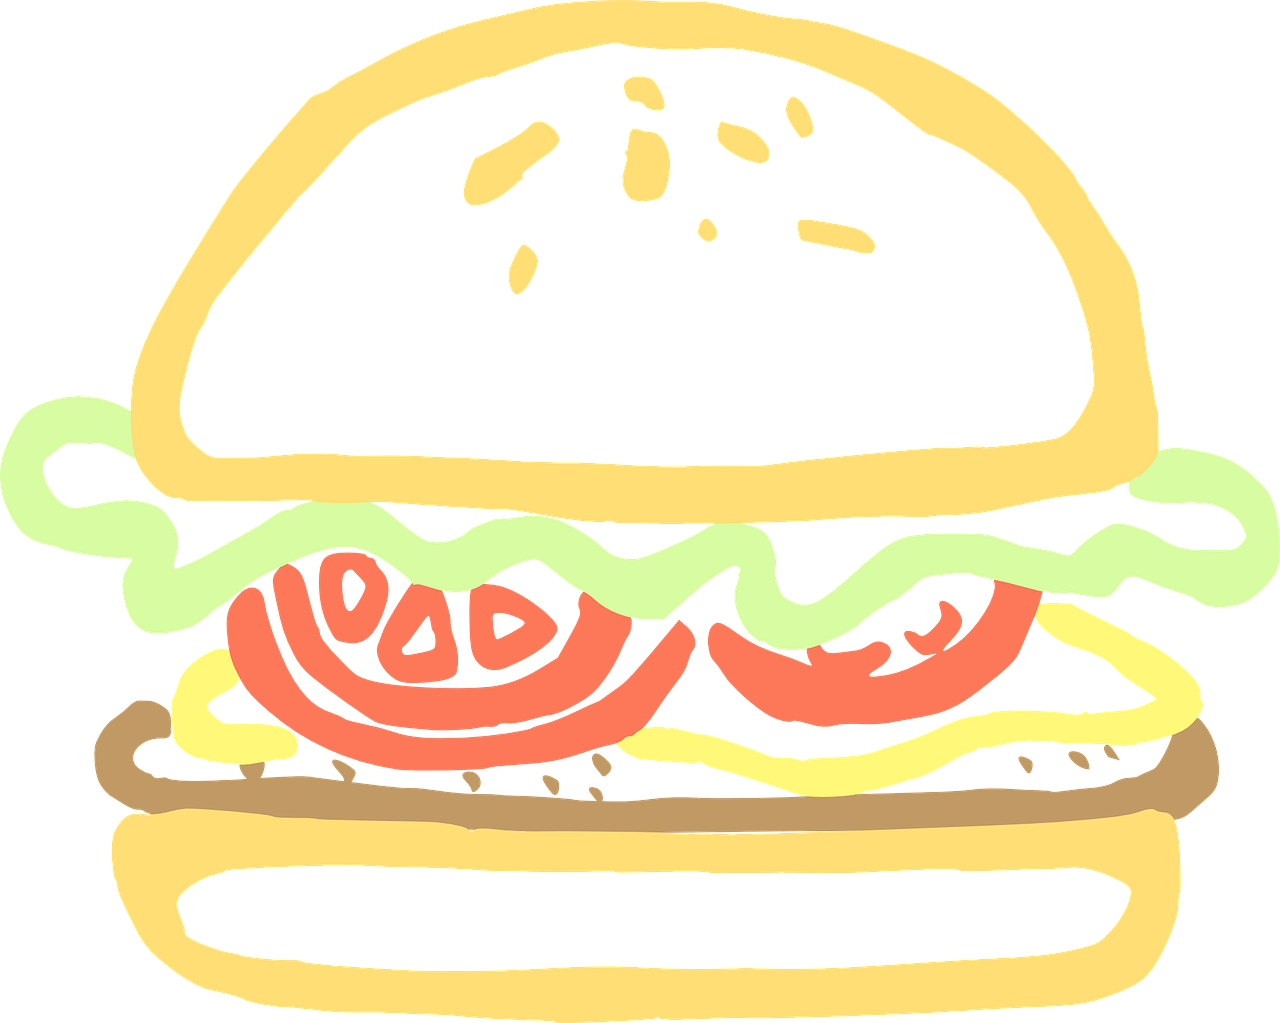 Рисунок фаст. Бургер векторное изображение. Бургер клипарт. Векторный фаст фуд. Нарисовать бургер.